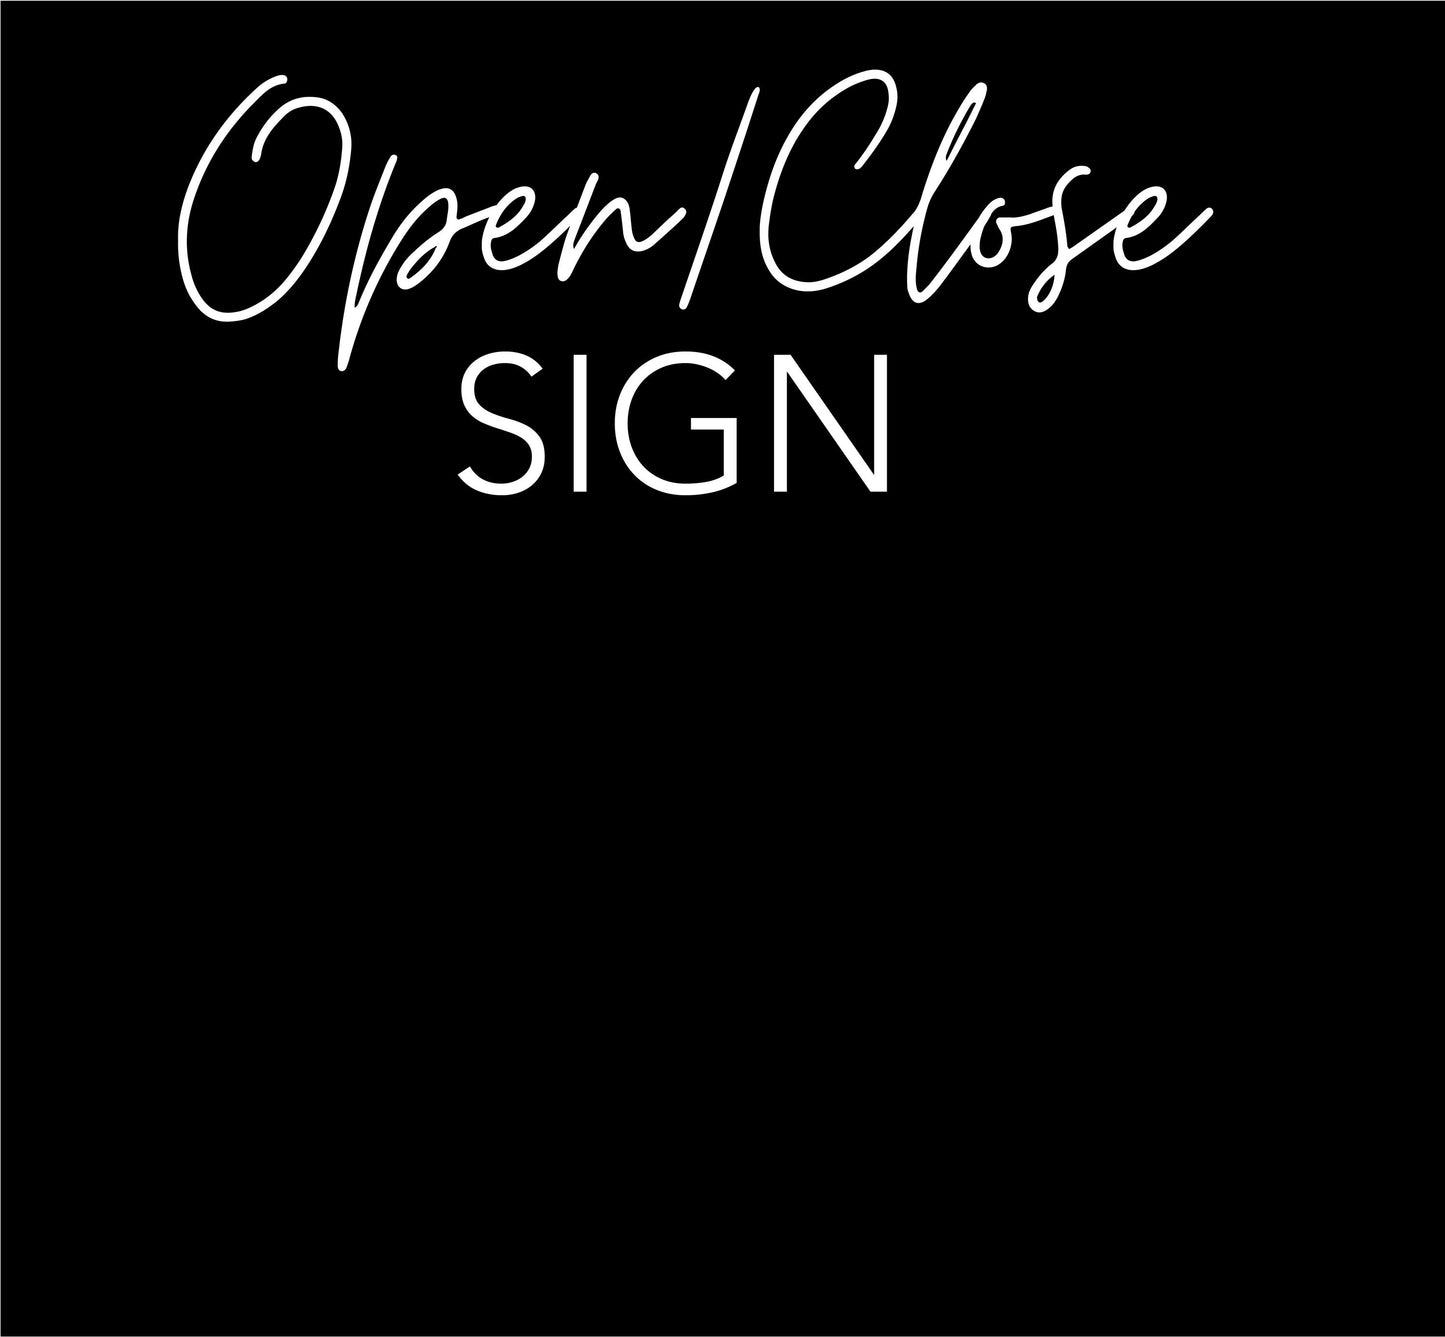 Open-Close Sign